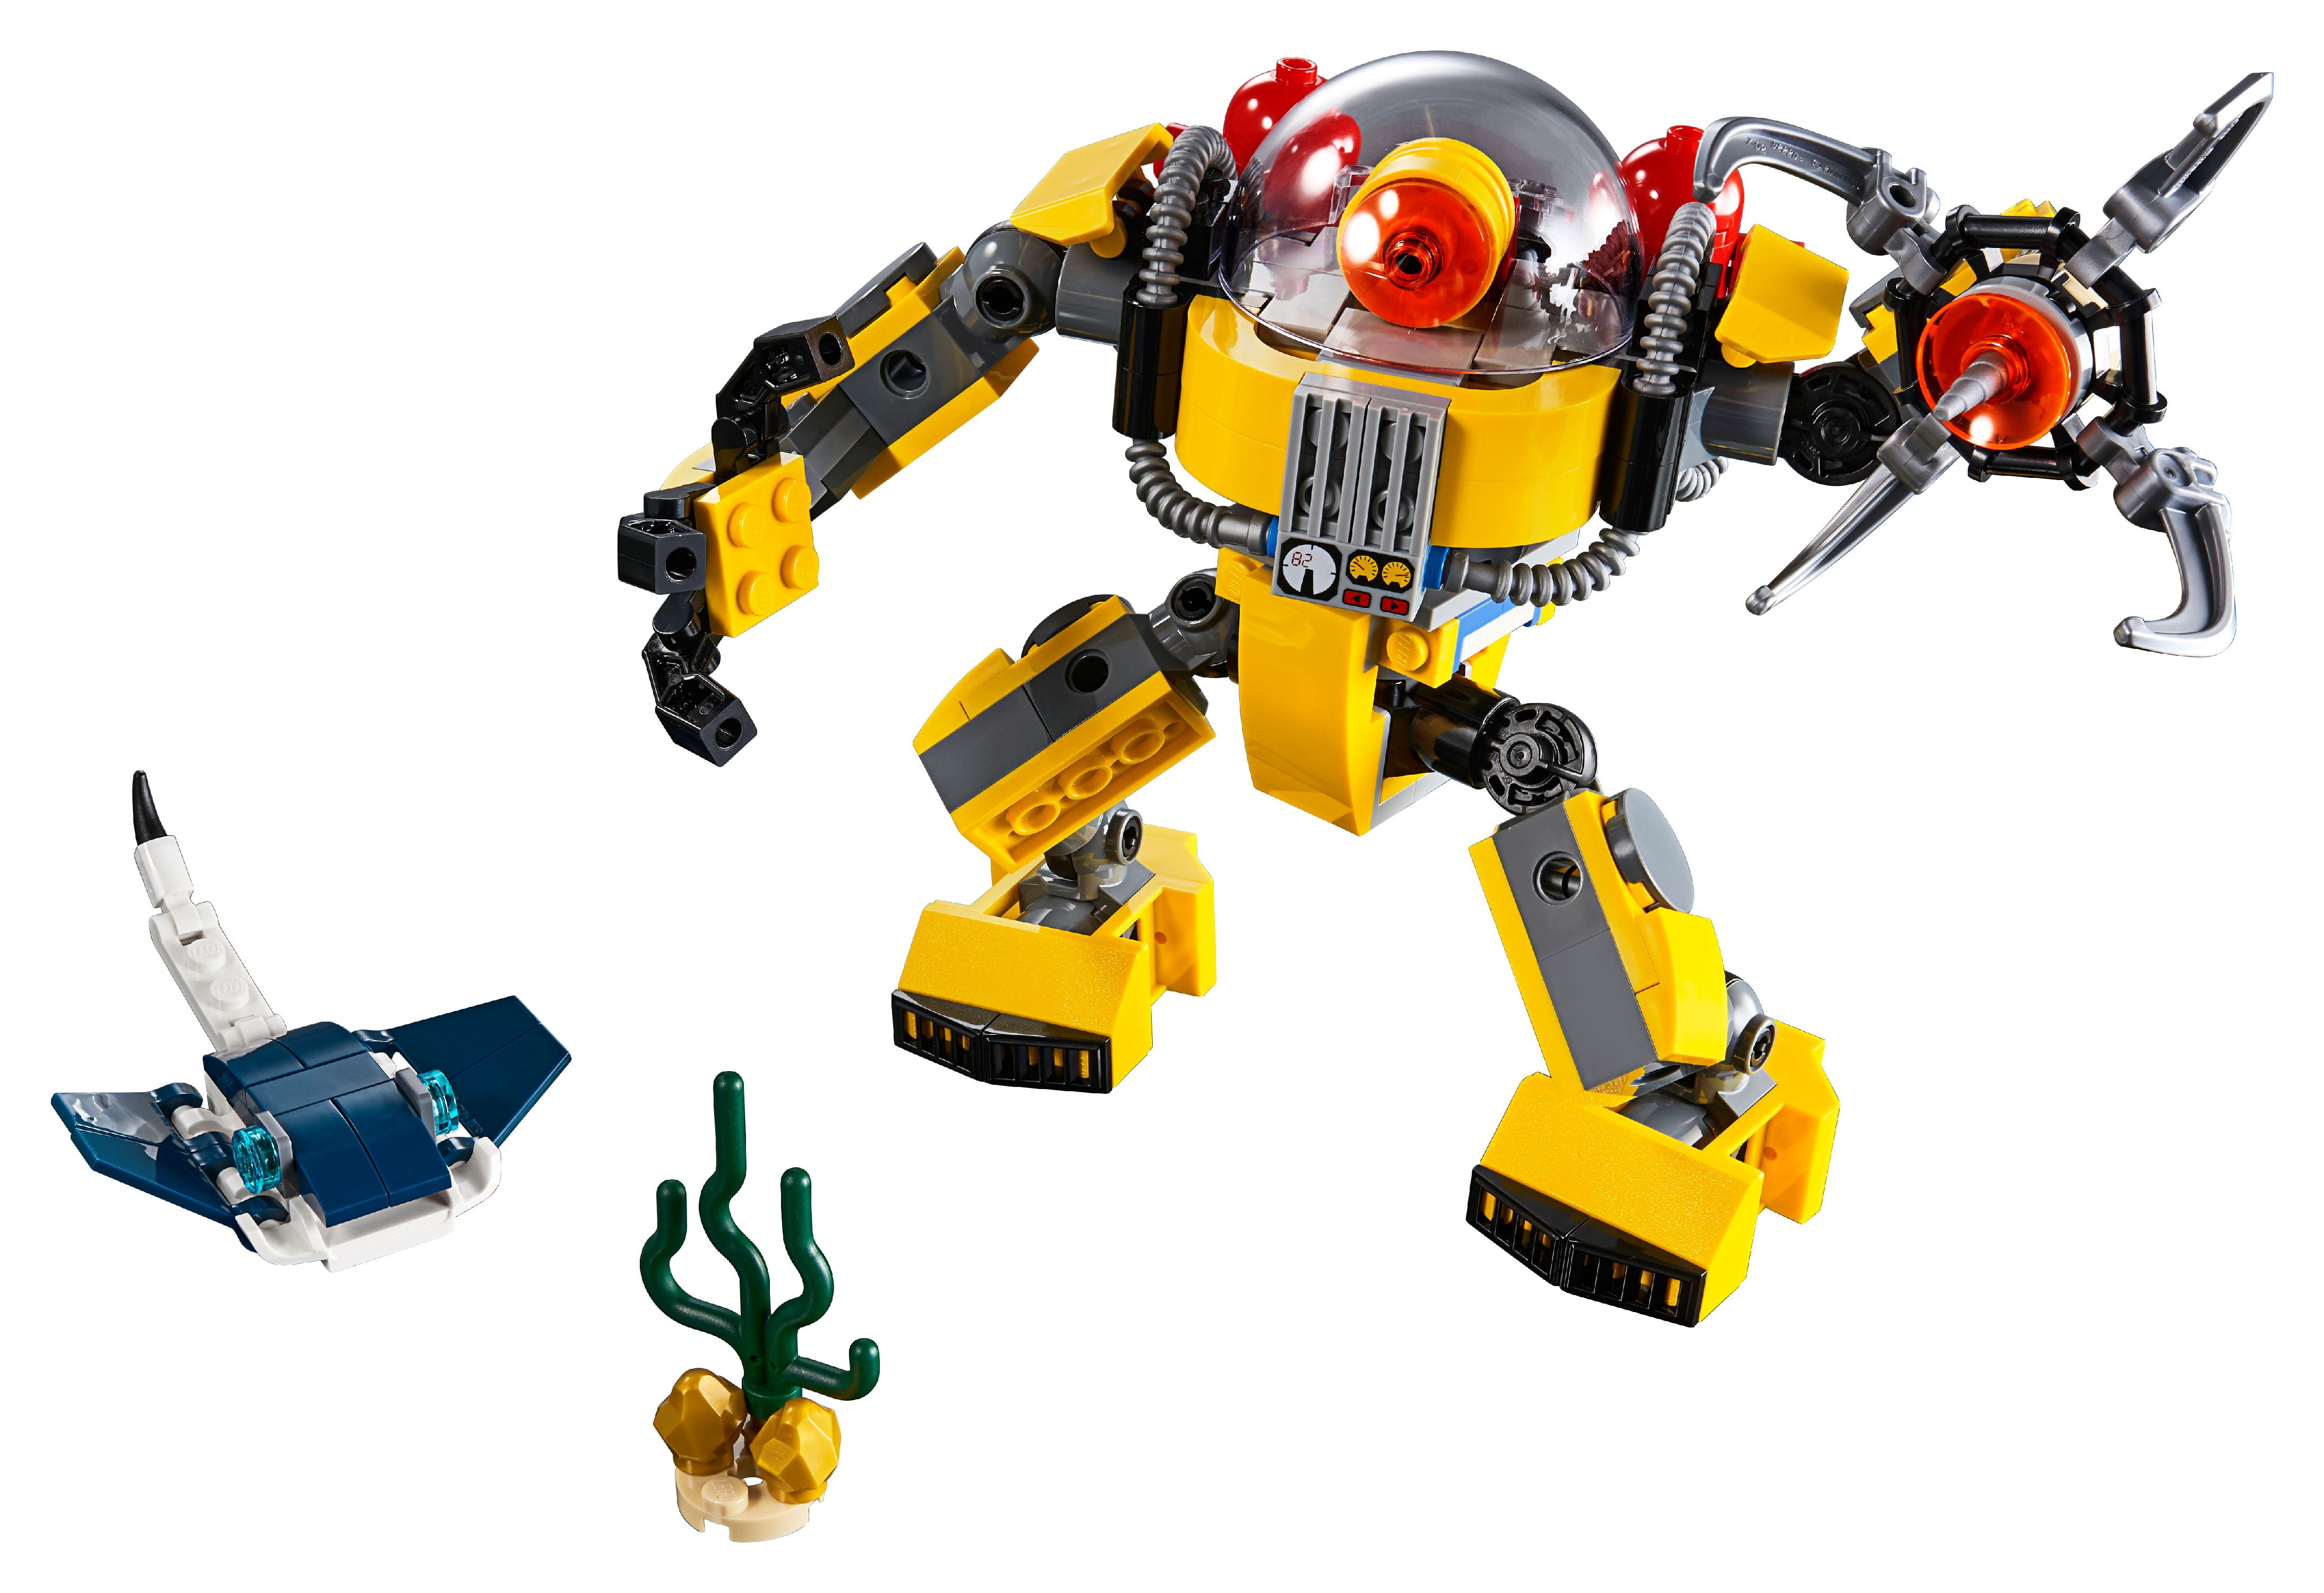 LEGO Creator Underwater Robot and Submarine Toy Kit 31090 - Walmart.com